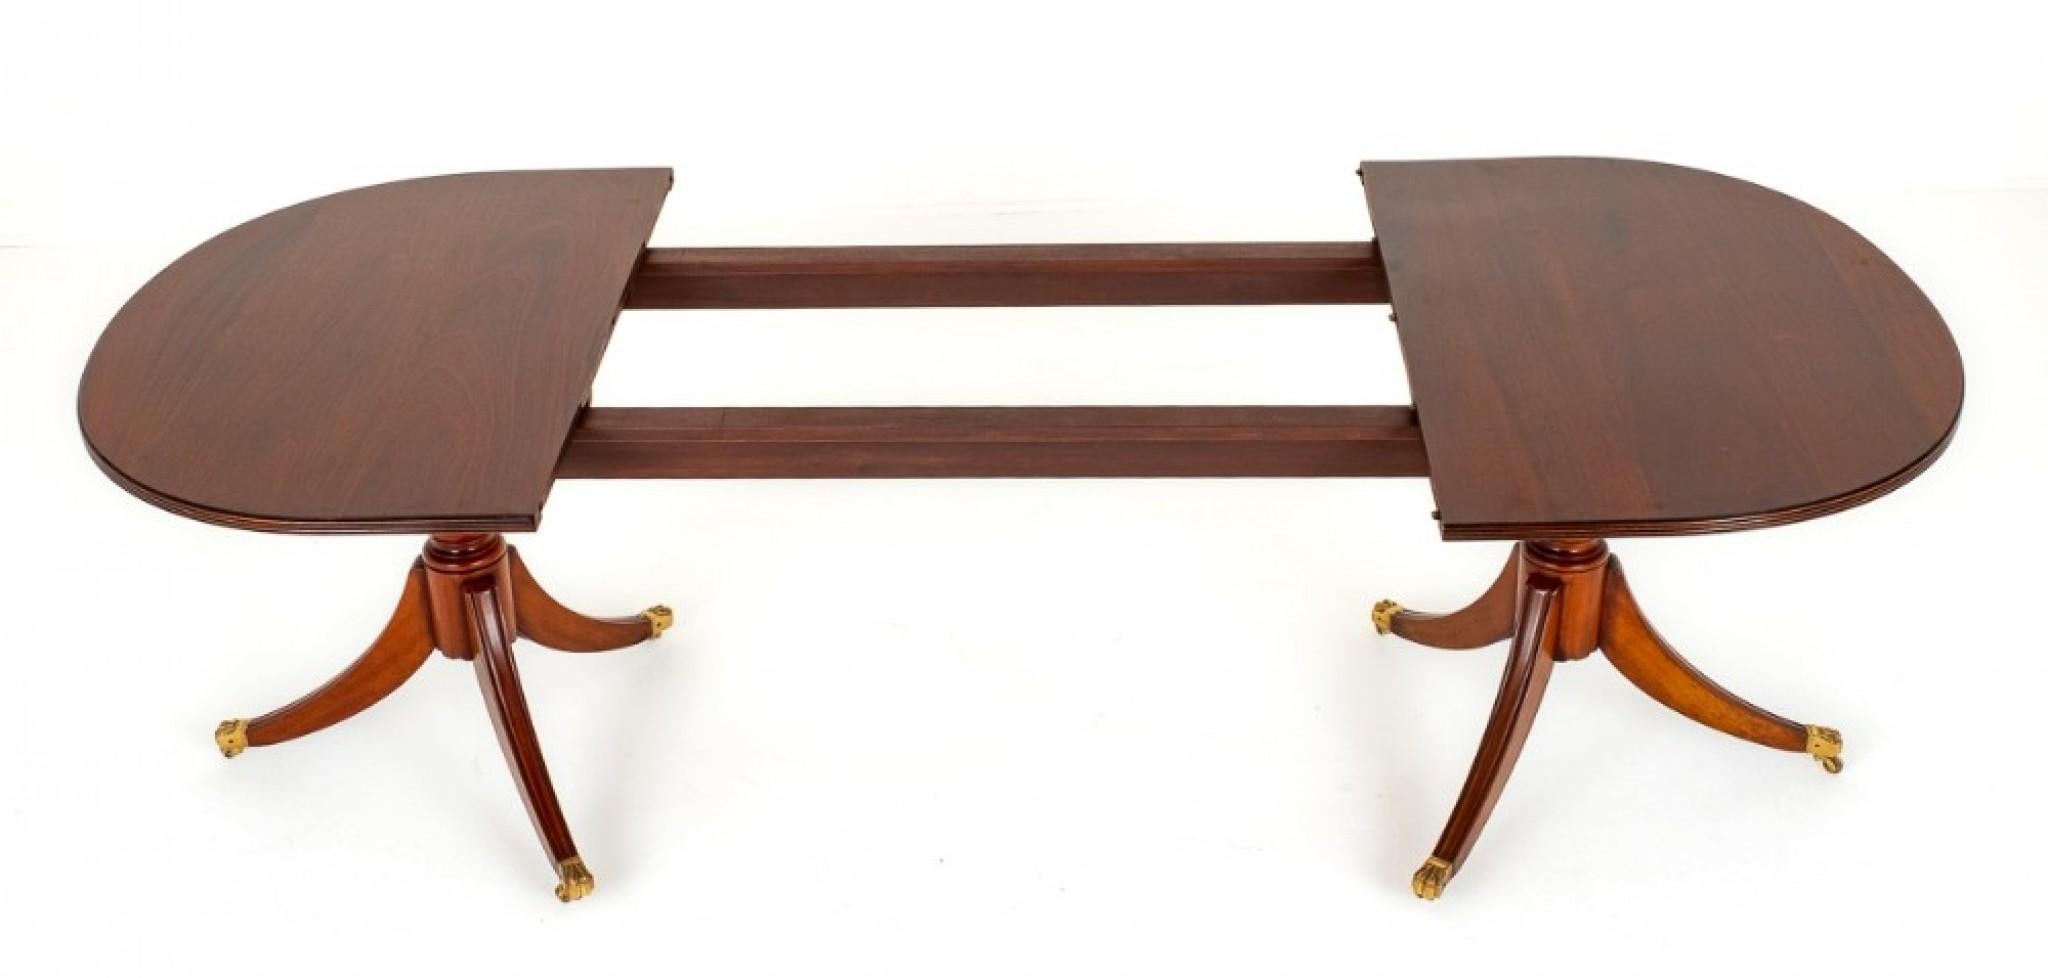 Regency Pedestal Table Mahogany Seats 10 5